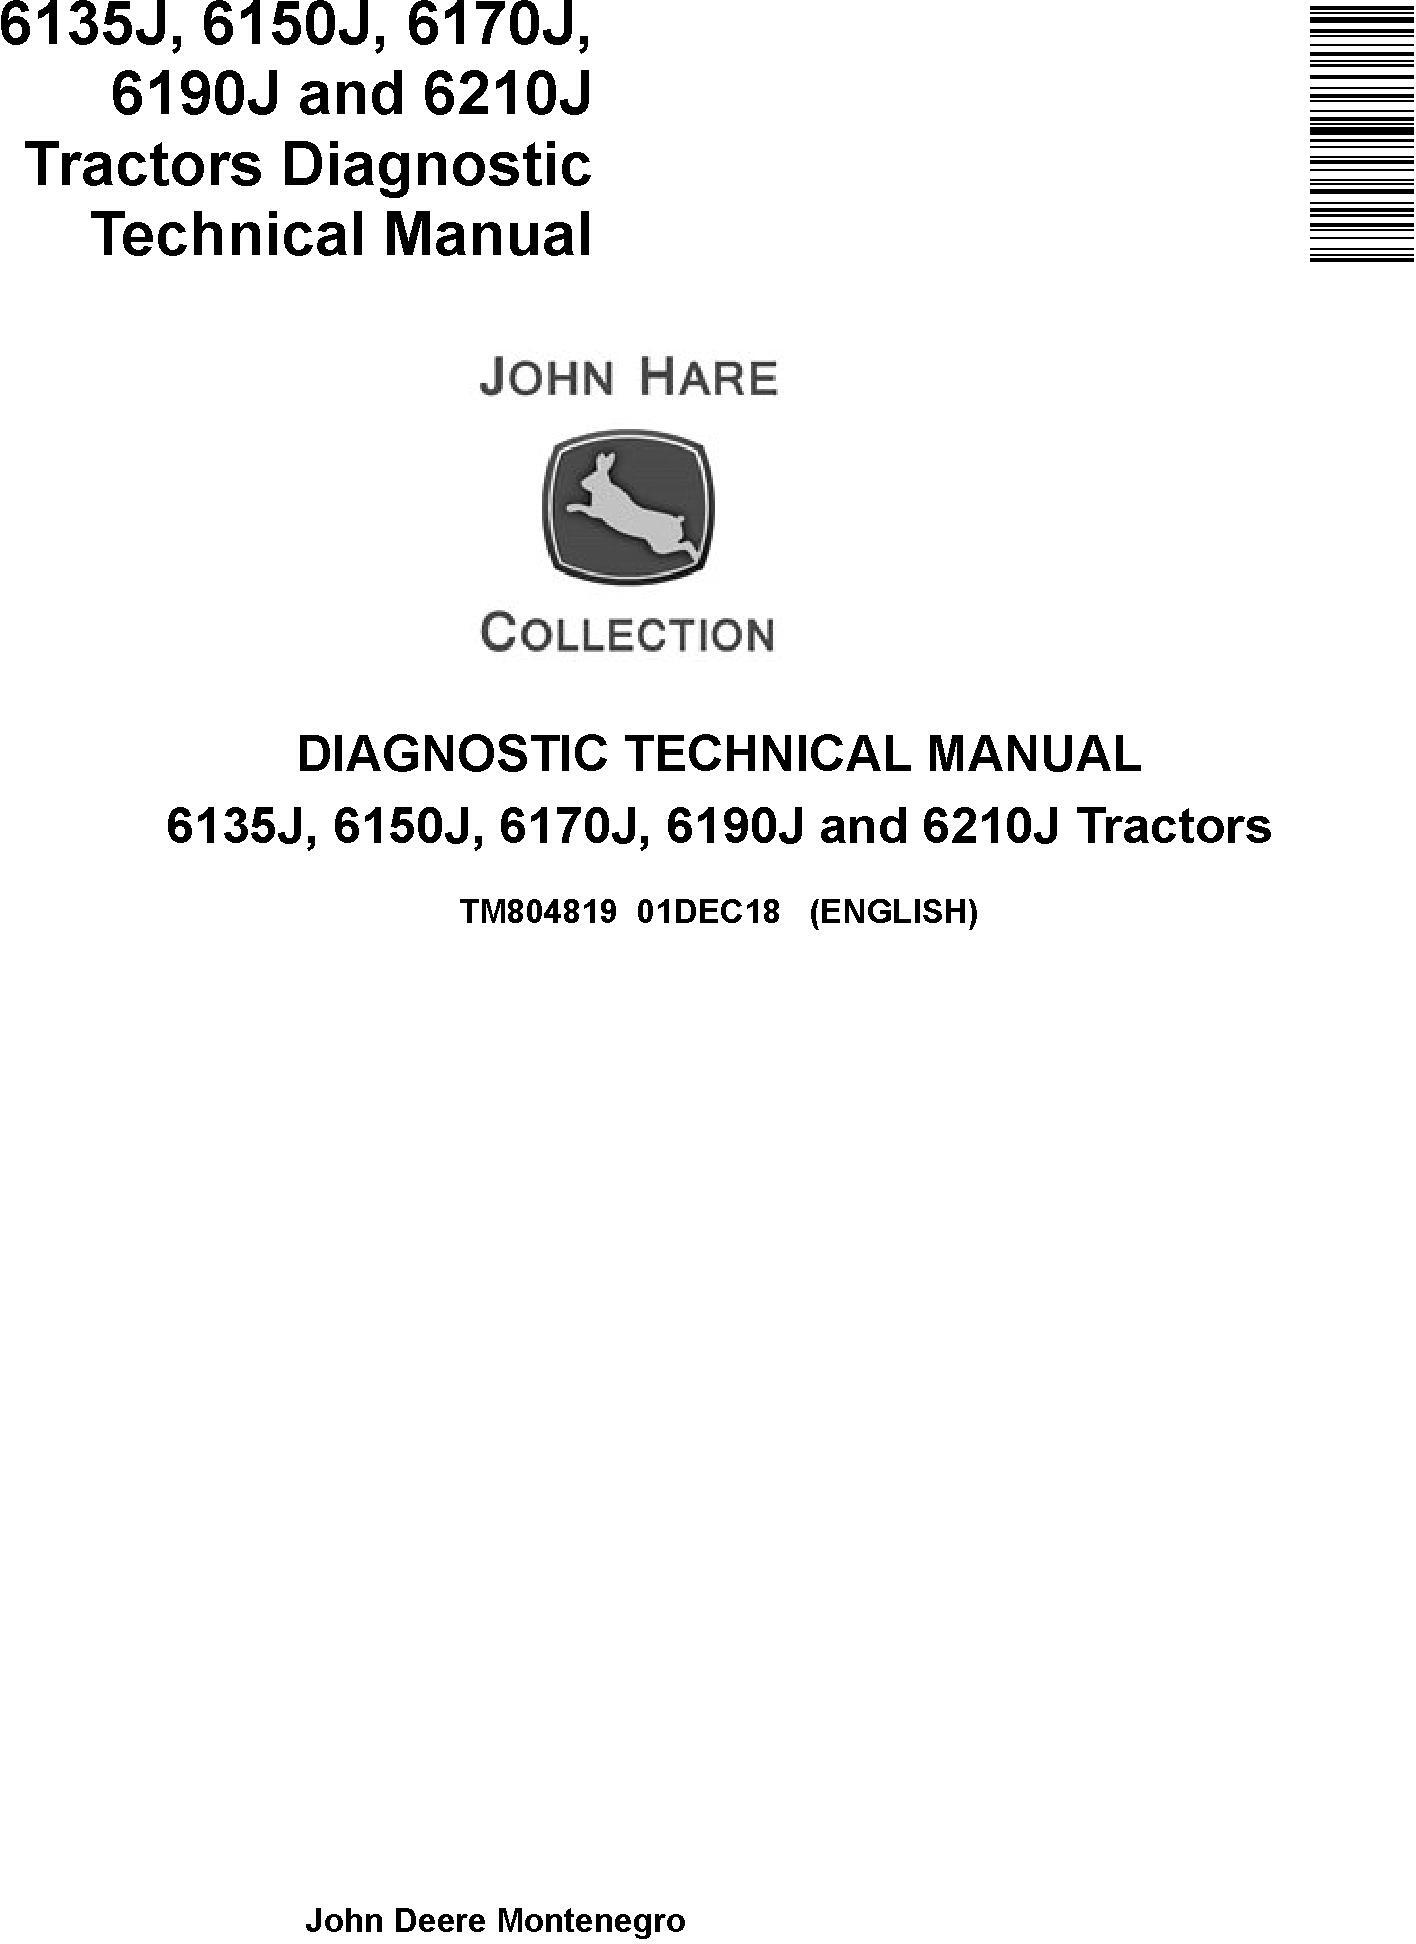 John Deere 6135J to 6210J Tractor Diagnostic Technical Manual TM804819